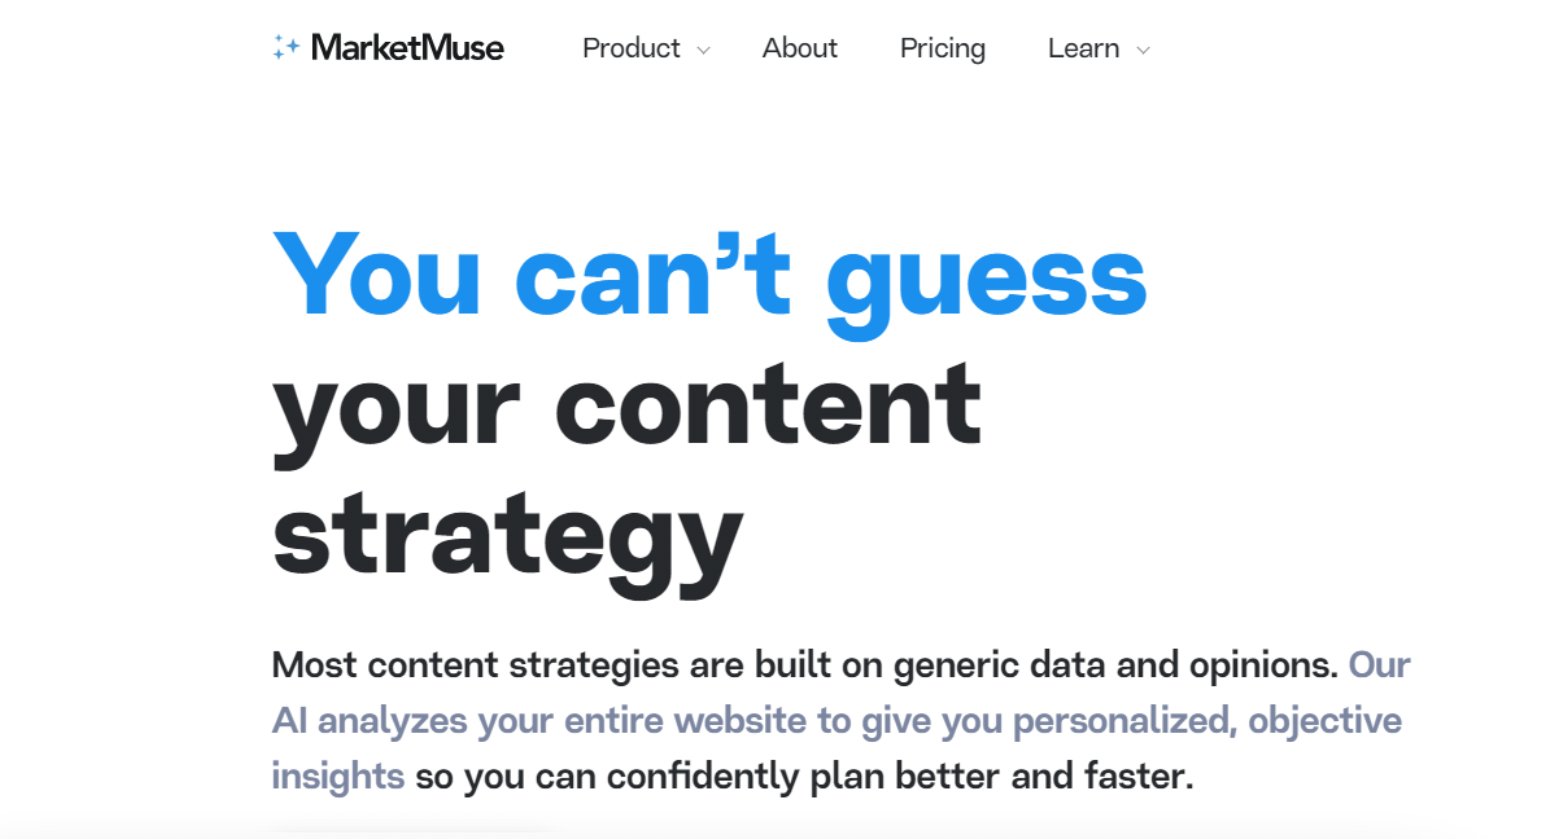 MarketMuse's homepage